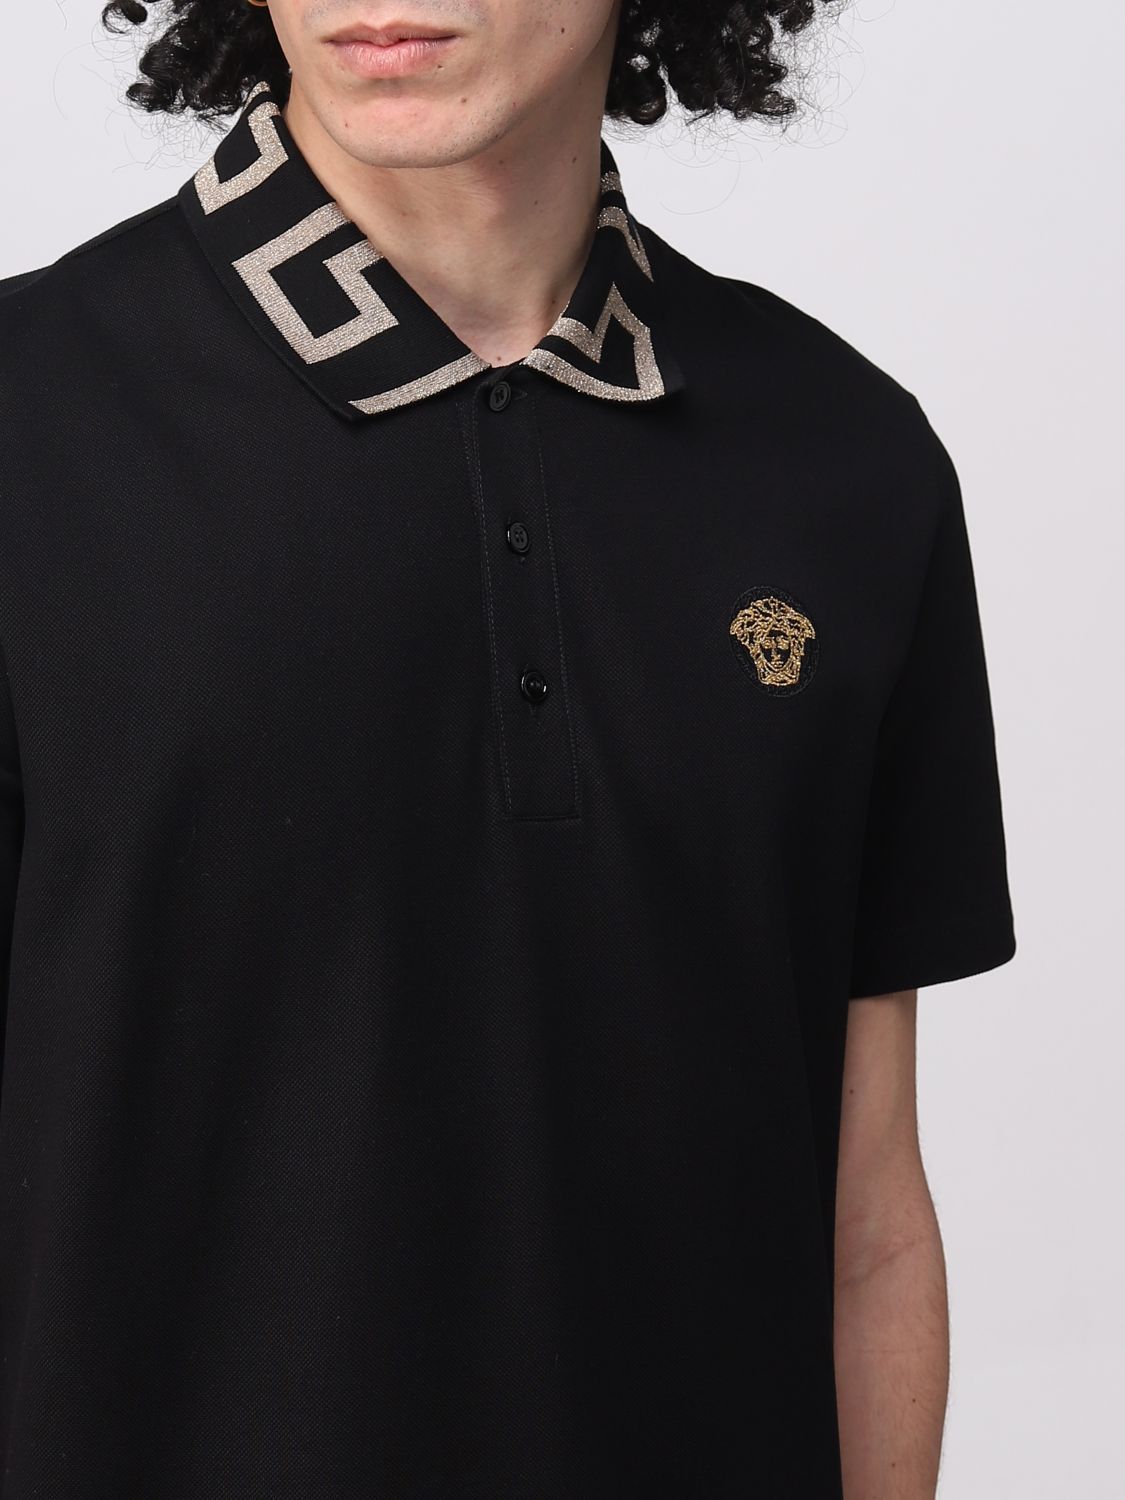 VERSACE: Greek Polo in cotton - Black | Versace polo shirt ...